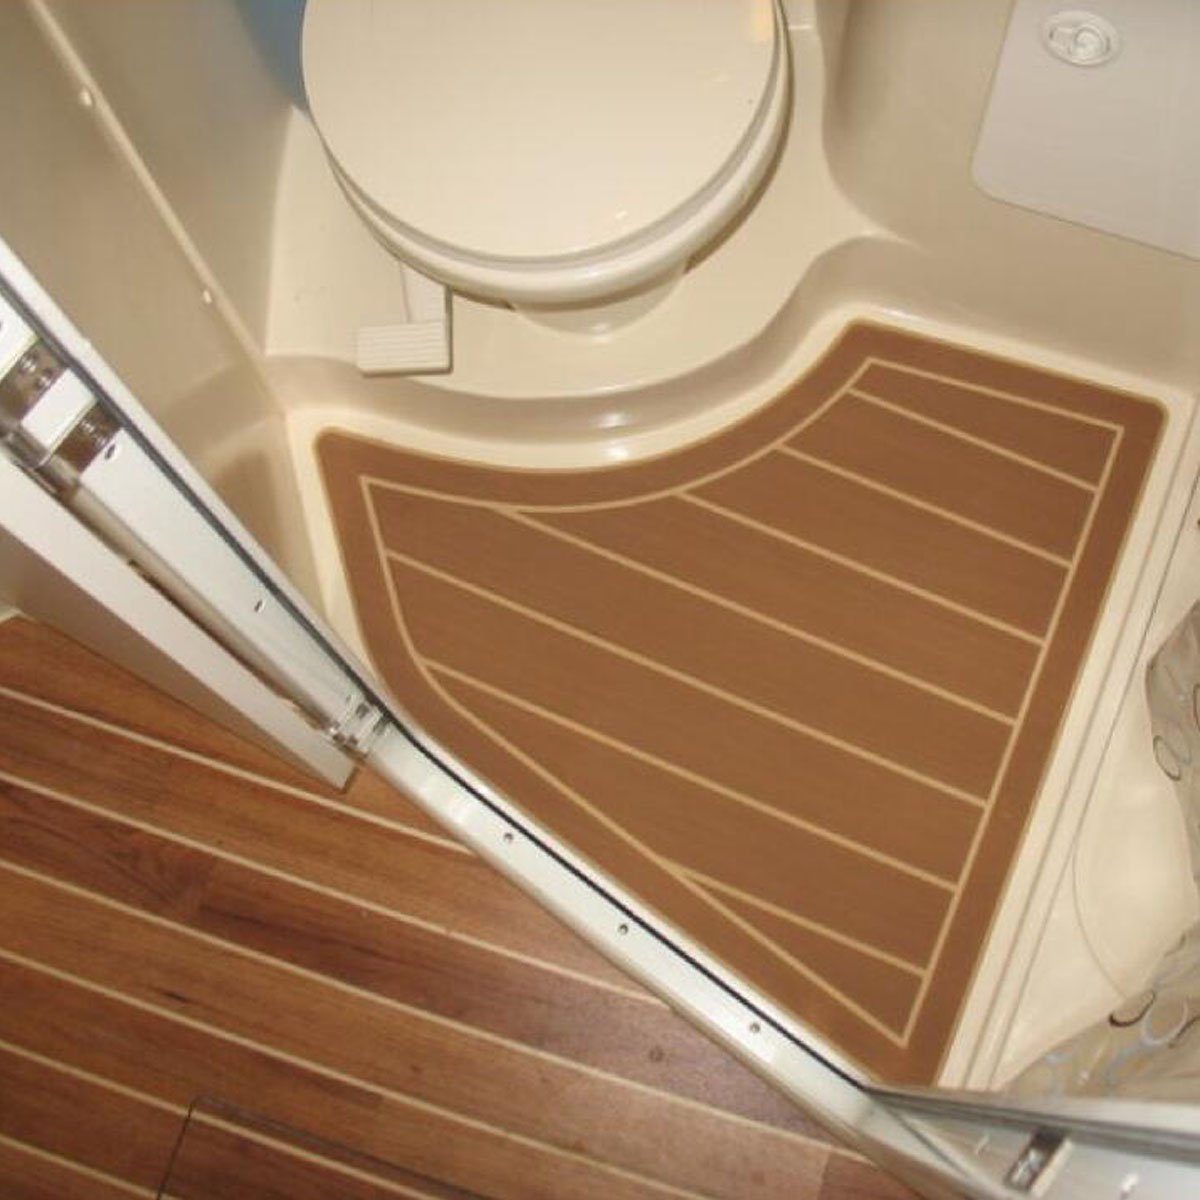 Bodenmatte, EVA Schaum Yacht Bootsboden 240x90cm, für Insma Bodenbelag 6mm